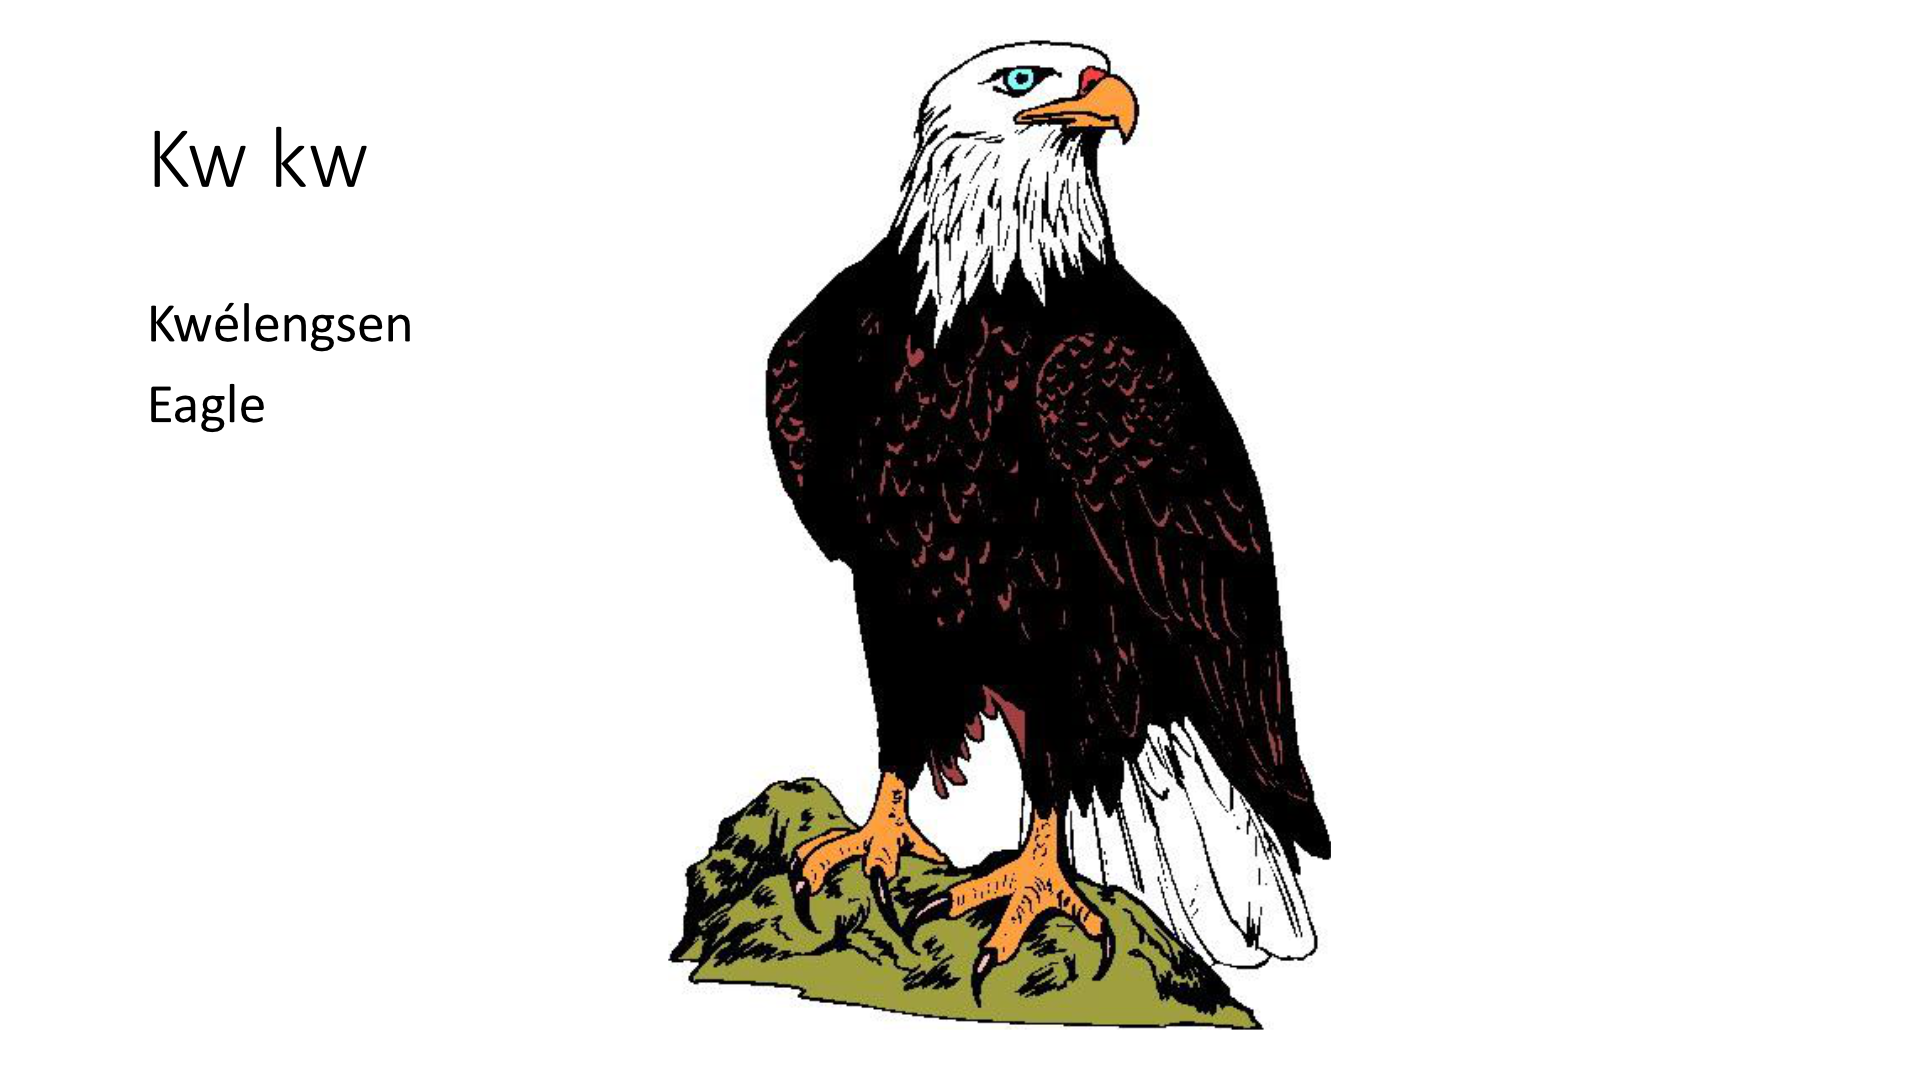 Eagle illustration